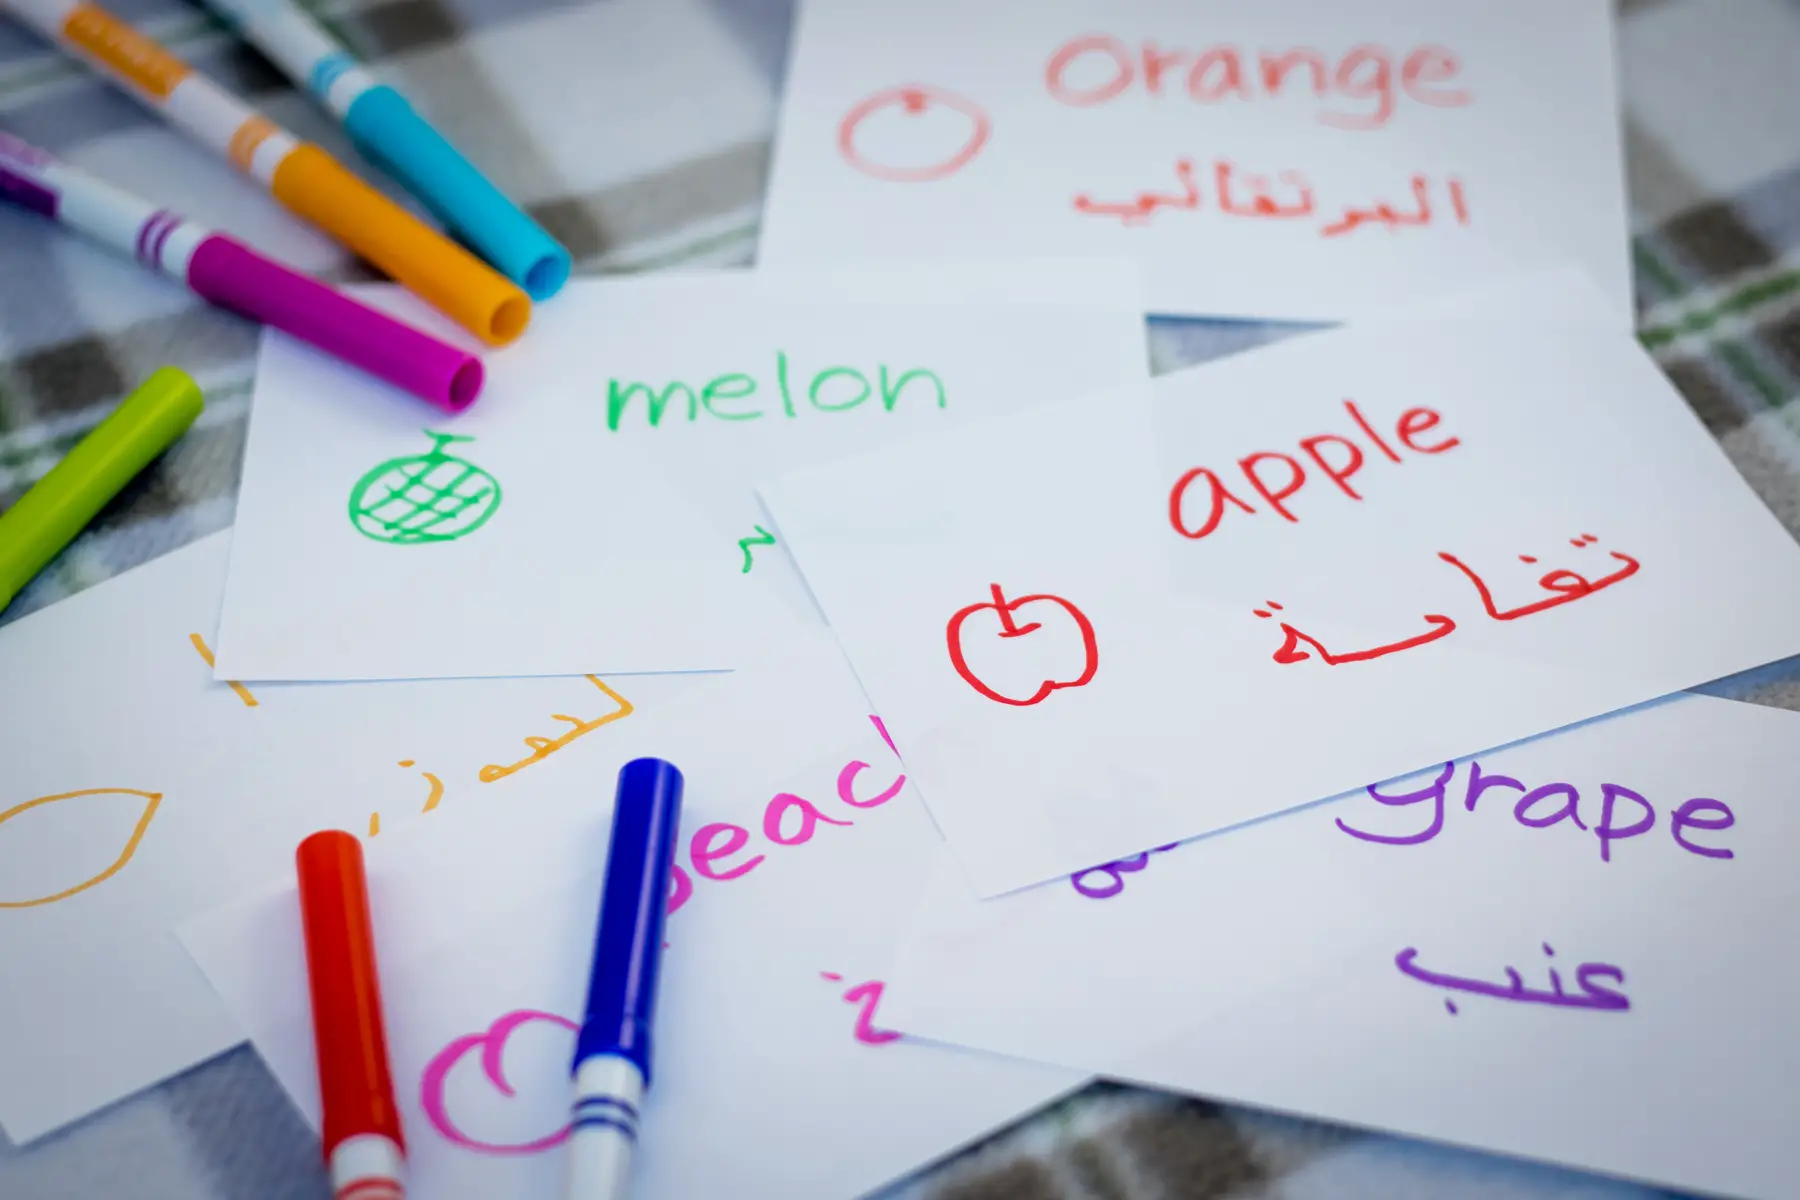 Arabic lessons